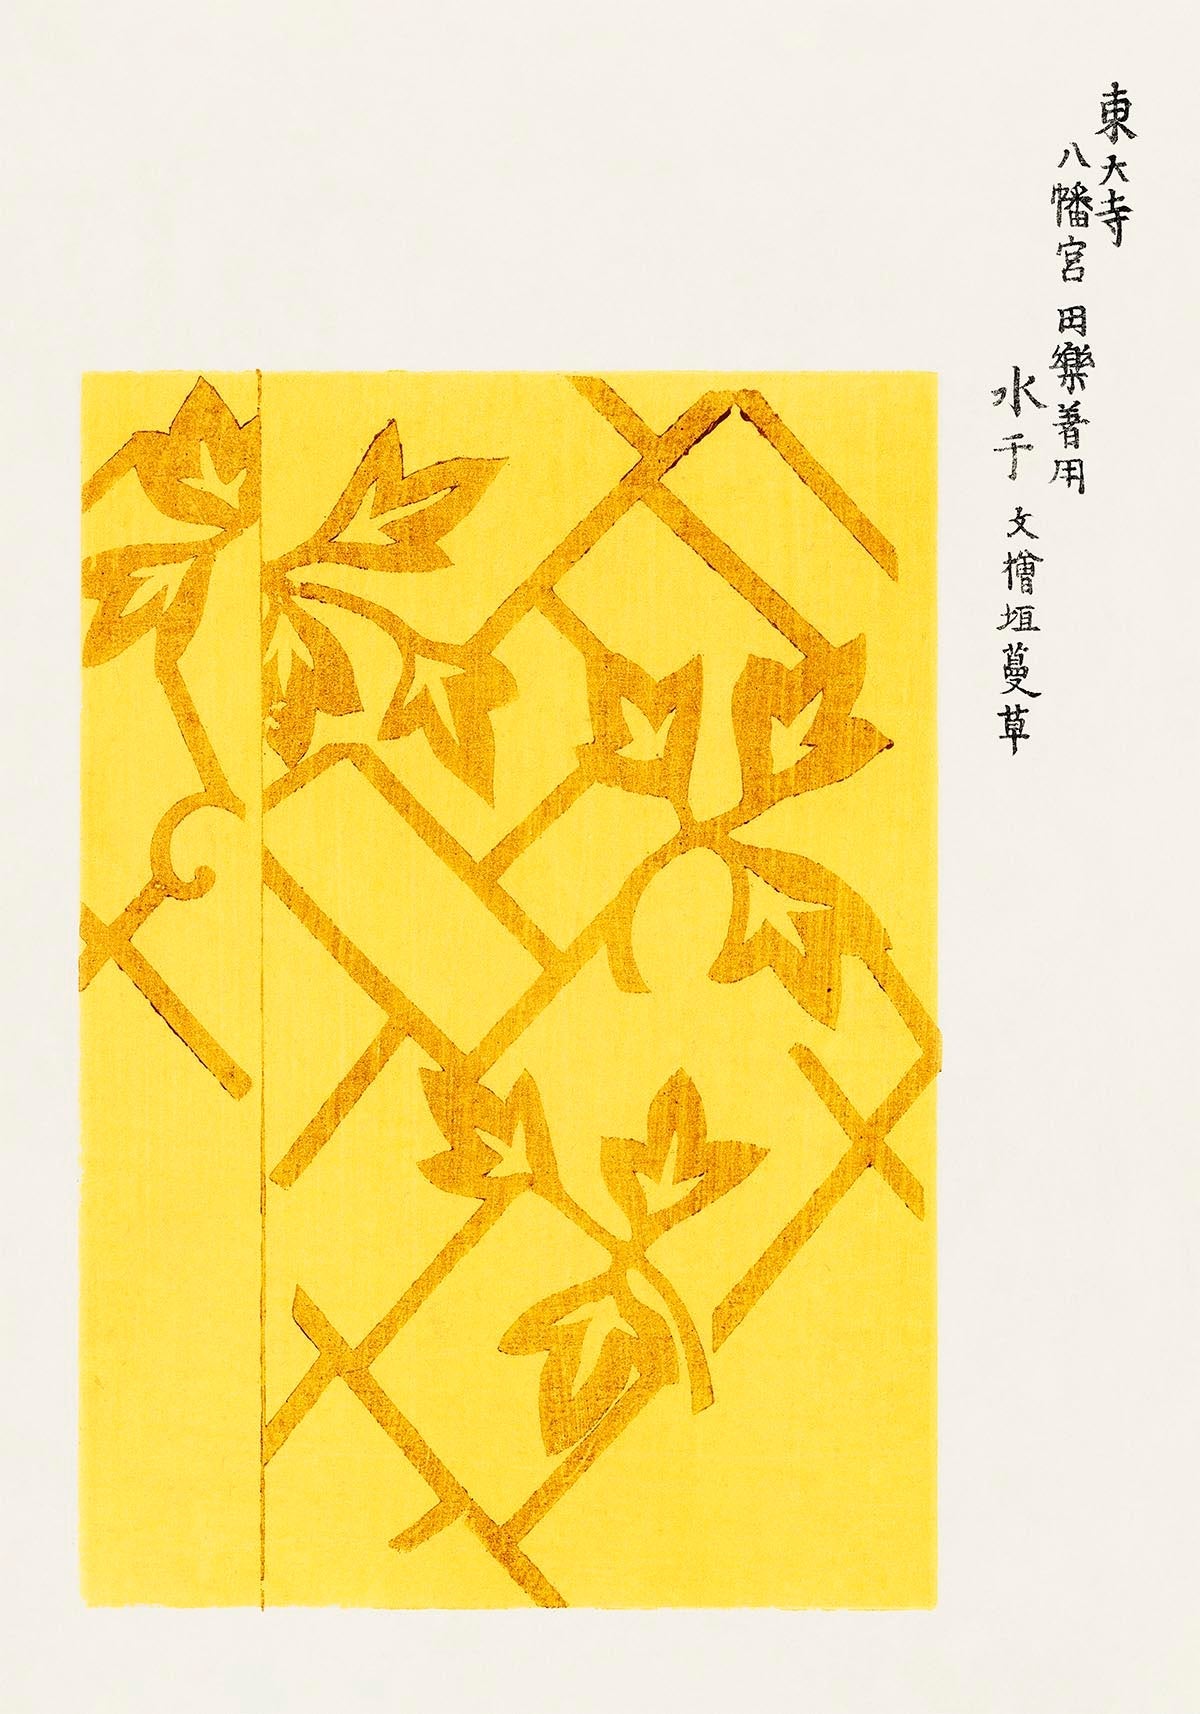 Vintage Japanese Woodblock Print No. 8